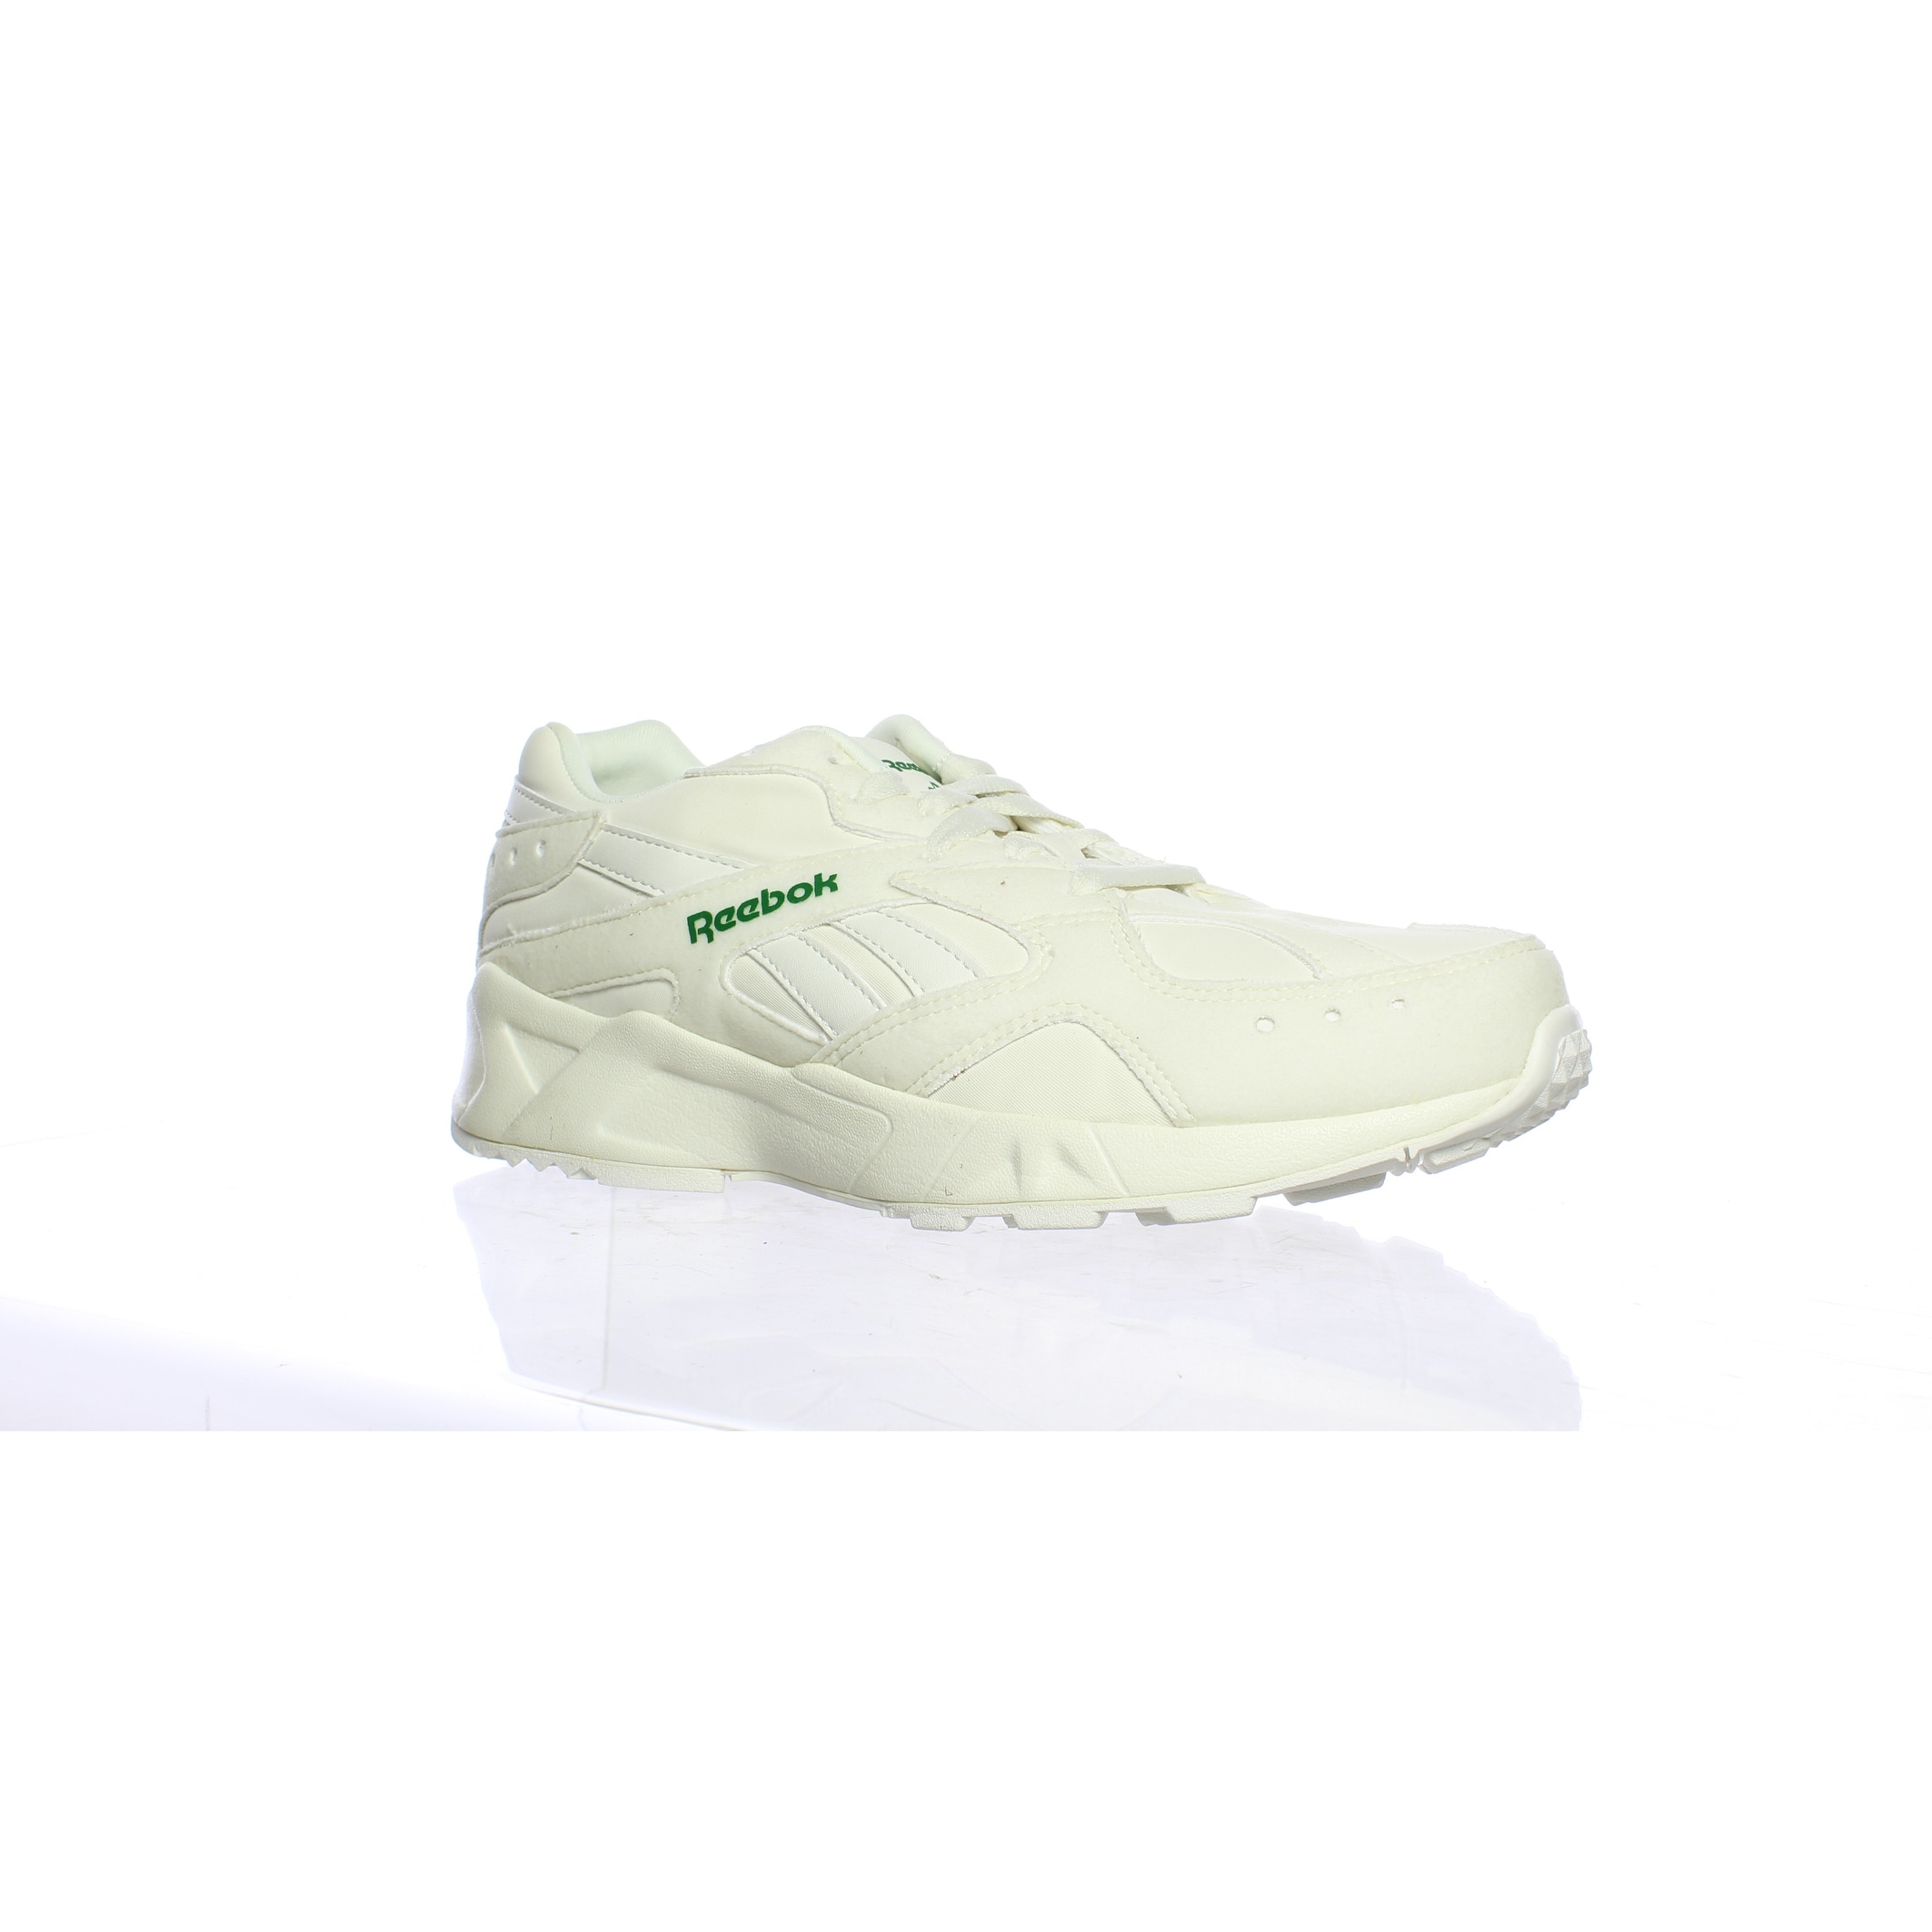 Aztrec White Running Shoes Size 8 